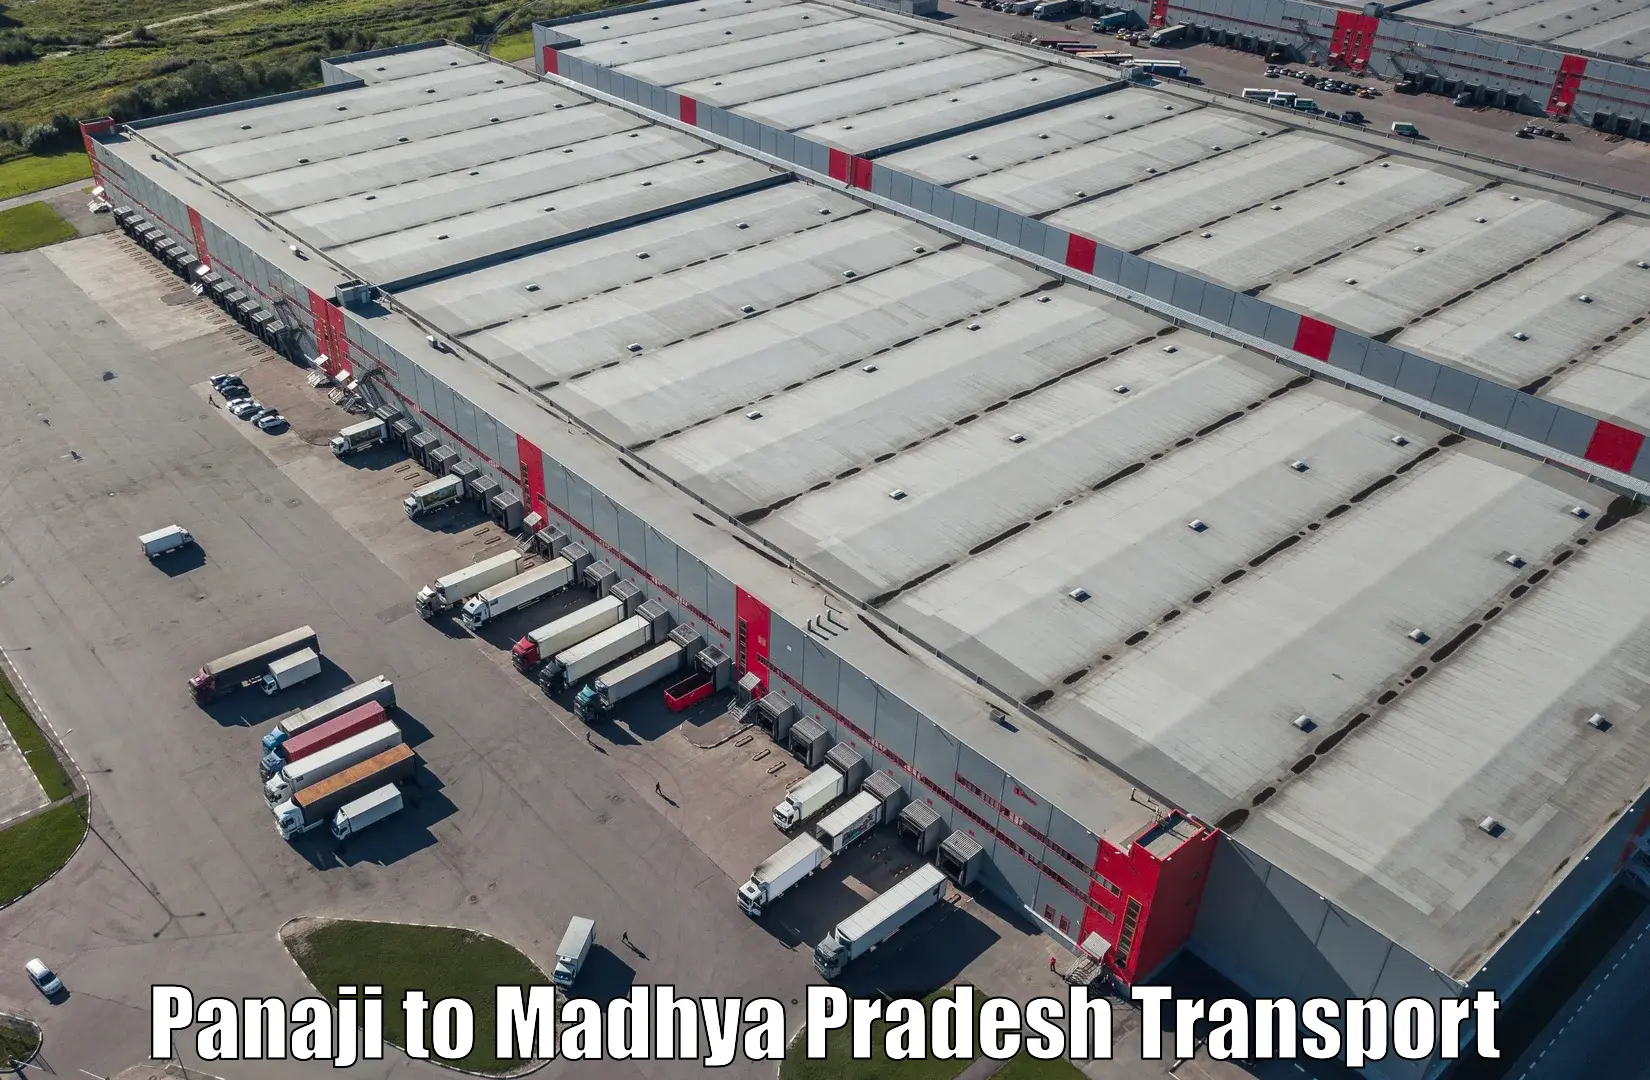 Truck transport companies in India Panaji to Amla